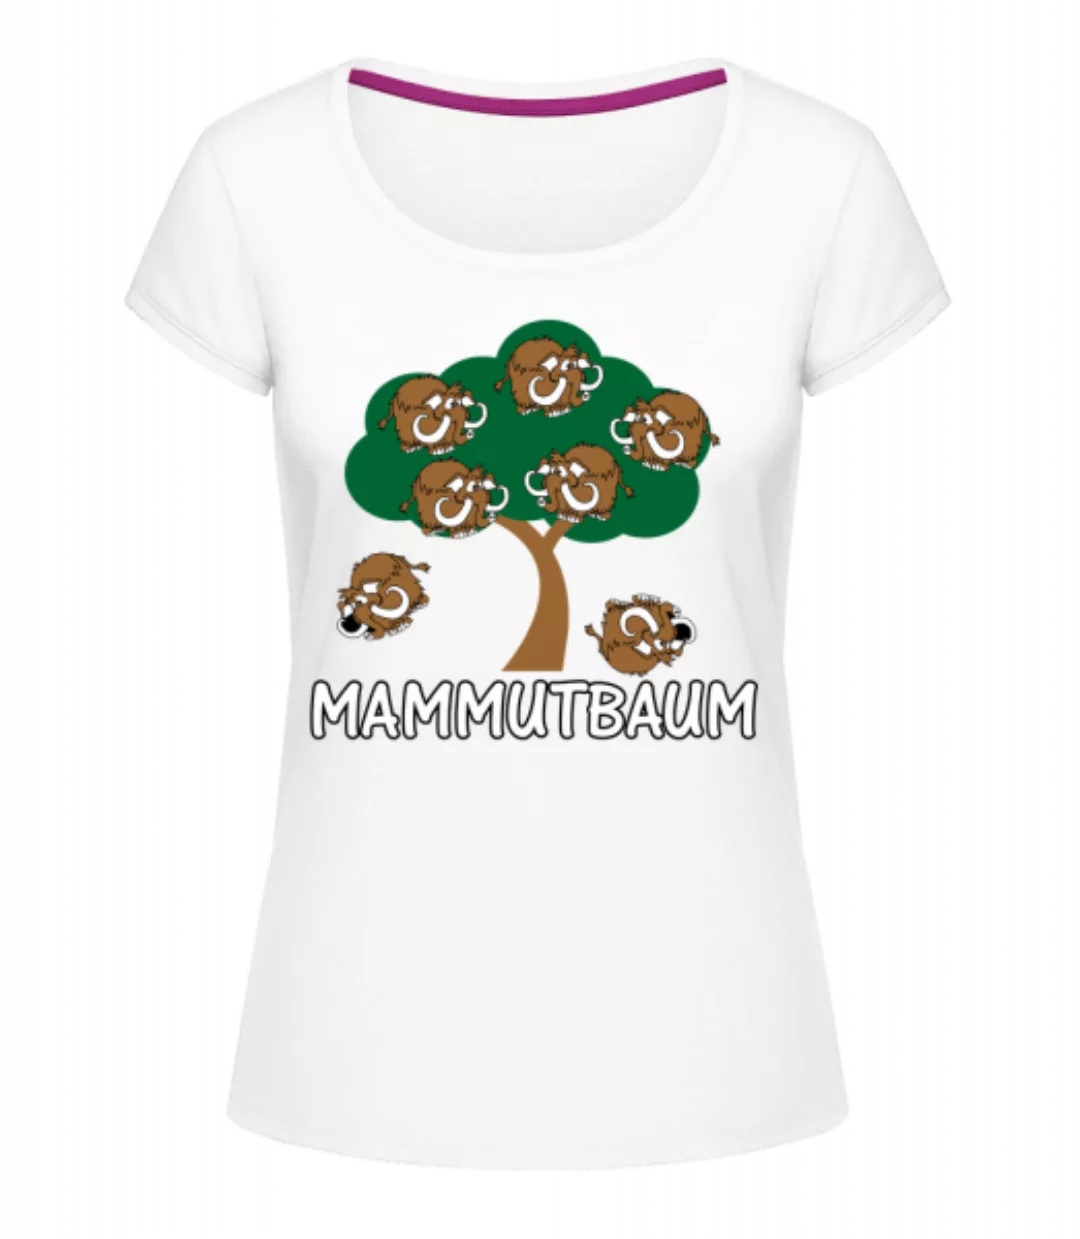 Mammutbaum · Frauen T-Shirt U-Ausschnitt günstig online kaufen